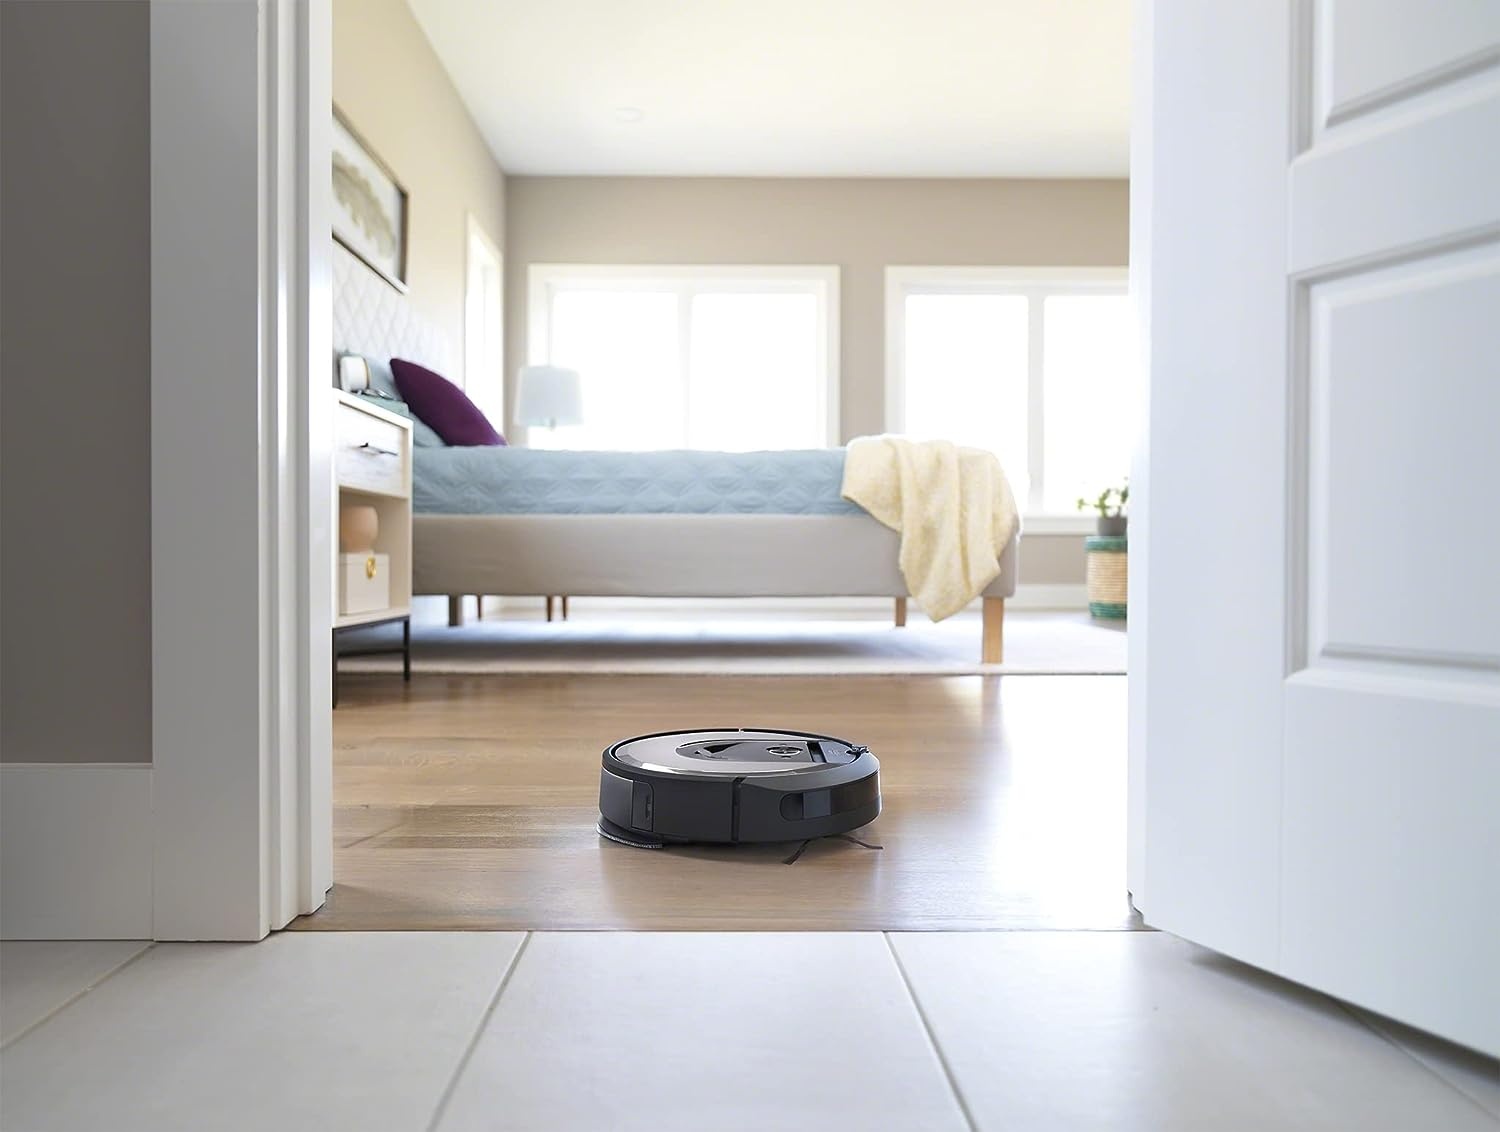 Vente flash  : l'aspirateur iRobot Roomba Combo i8 + voit